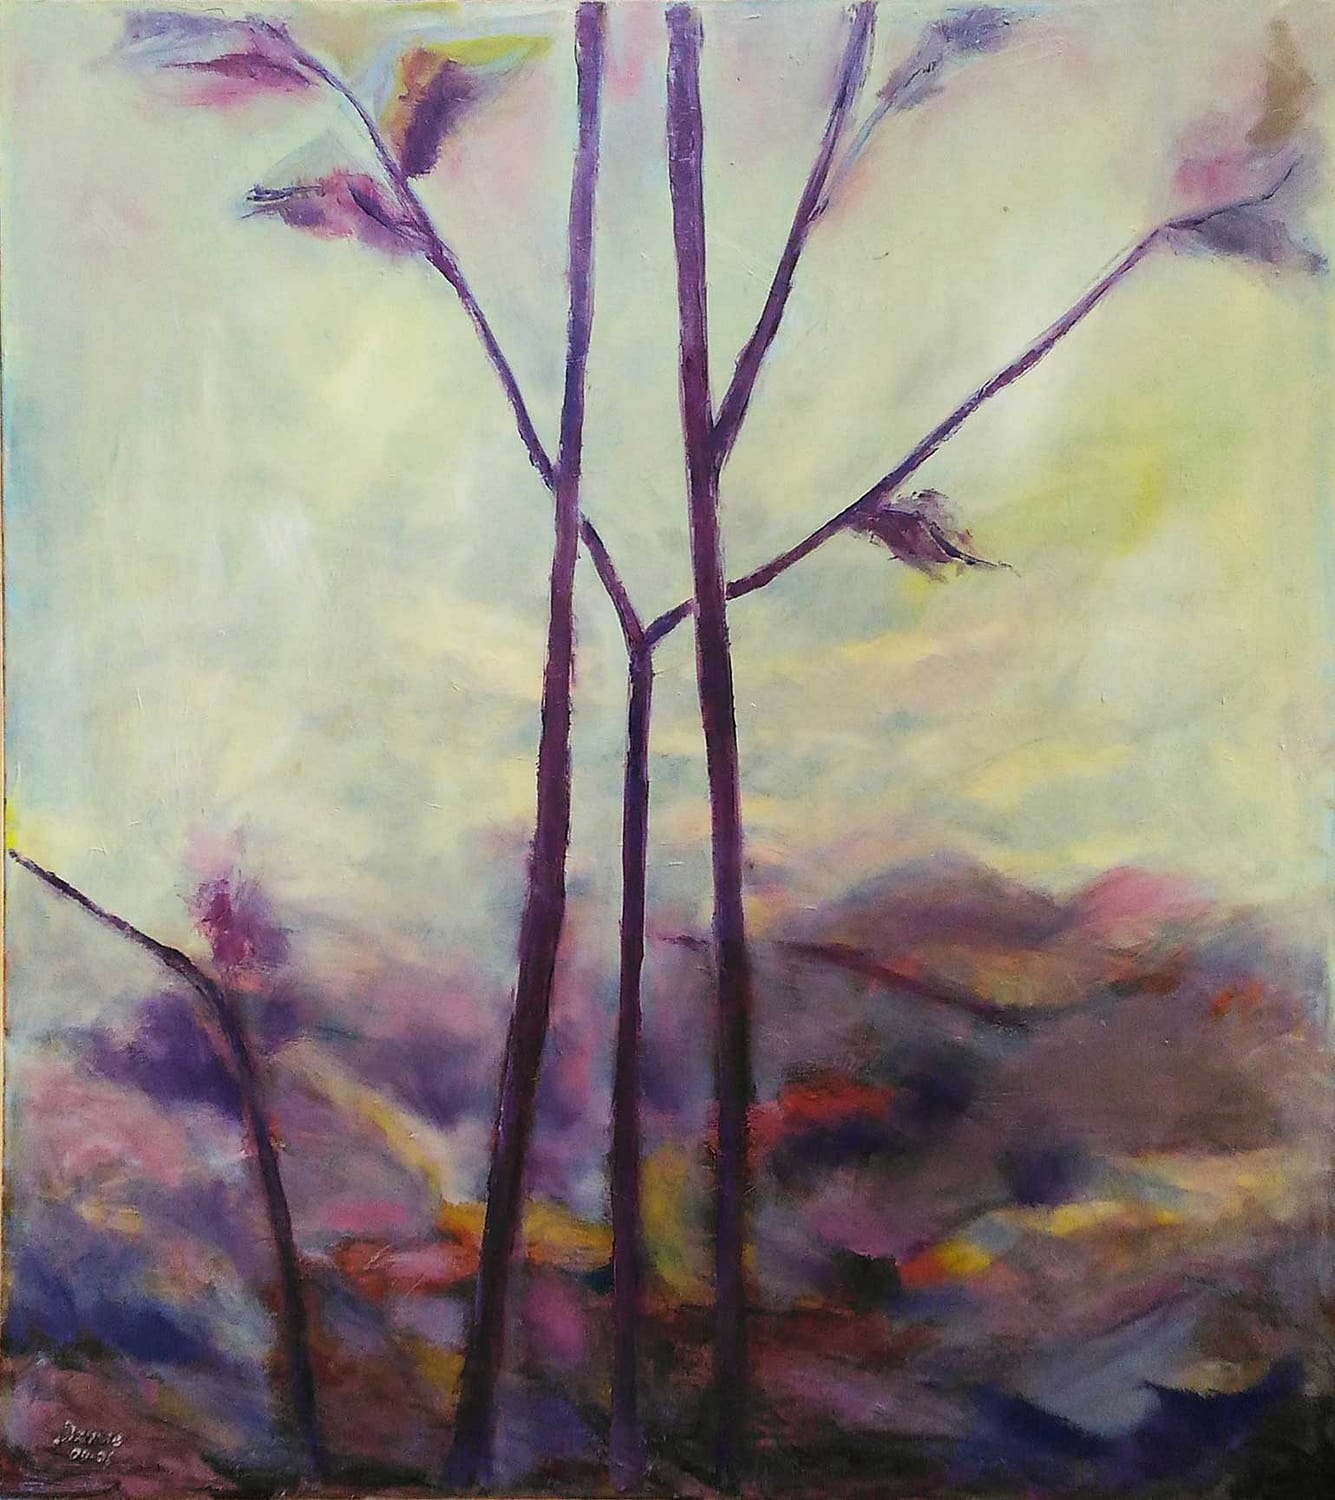 Sera-2006 Denise-Gemin
Oil painting cm.90x100